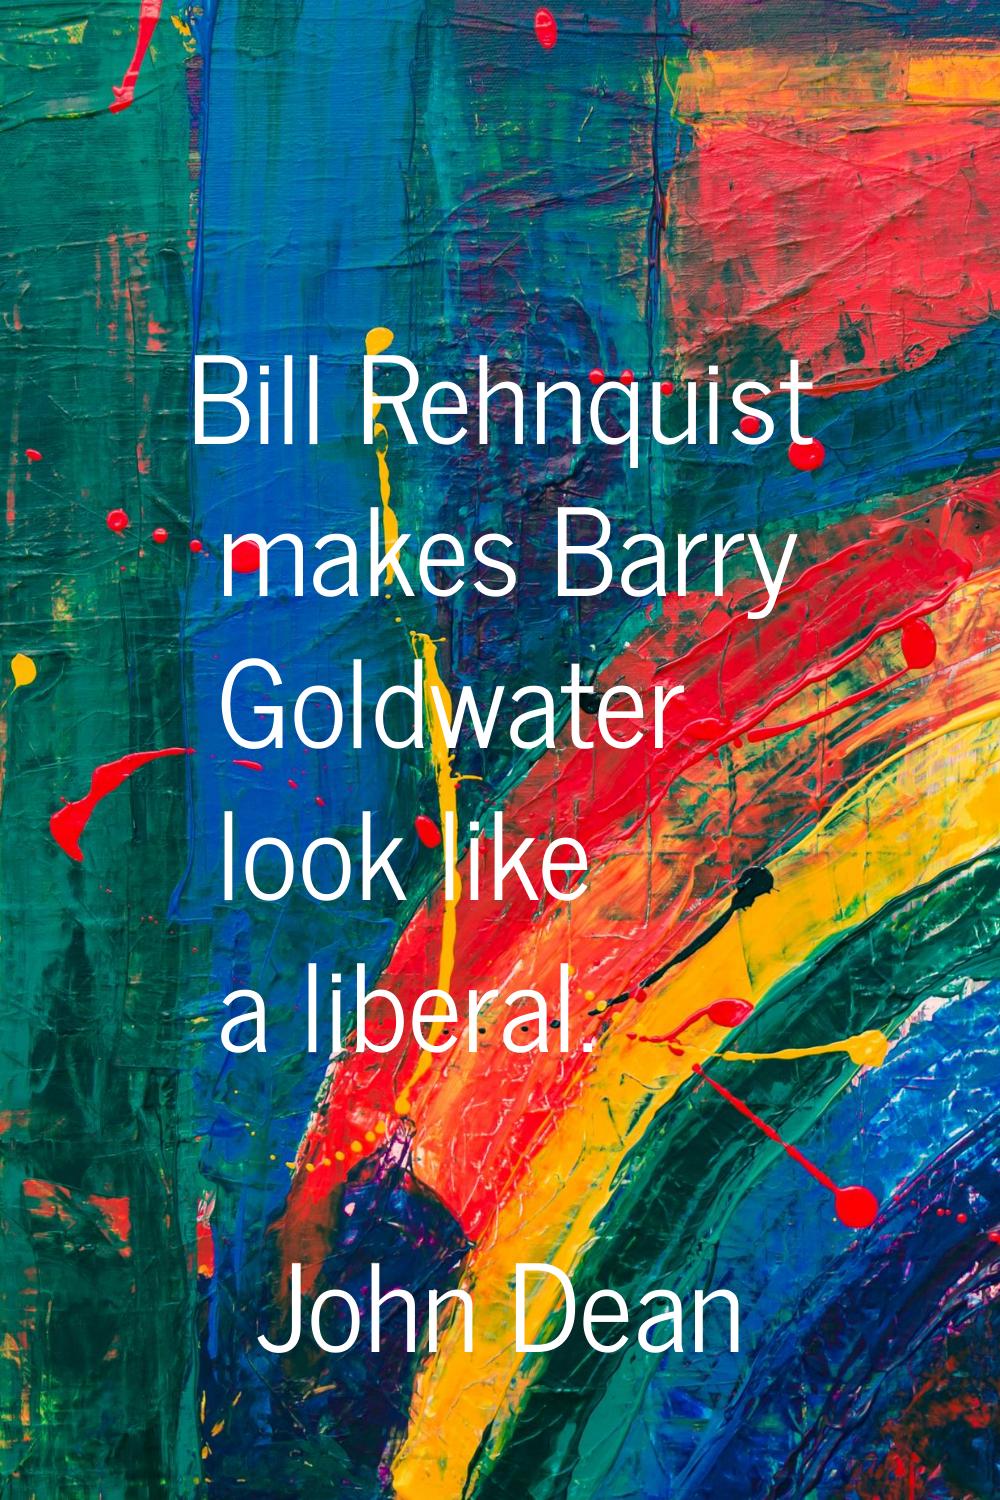 Bill Rehnquist makes Barry Goldwater look like a liberal.